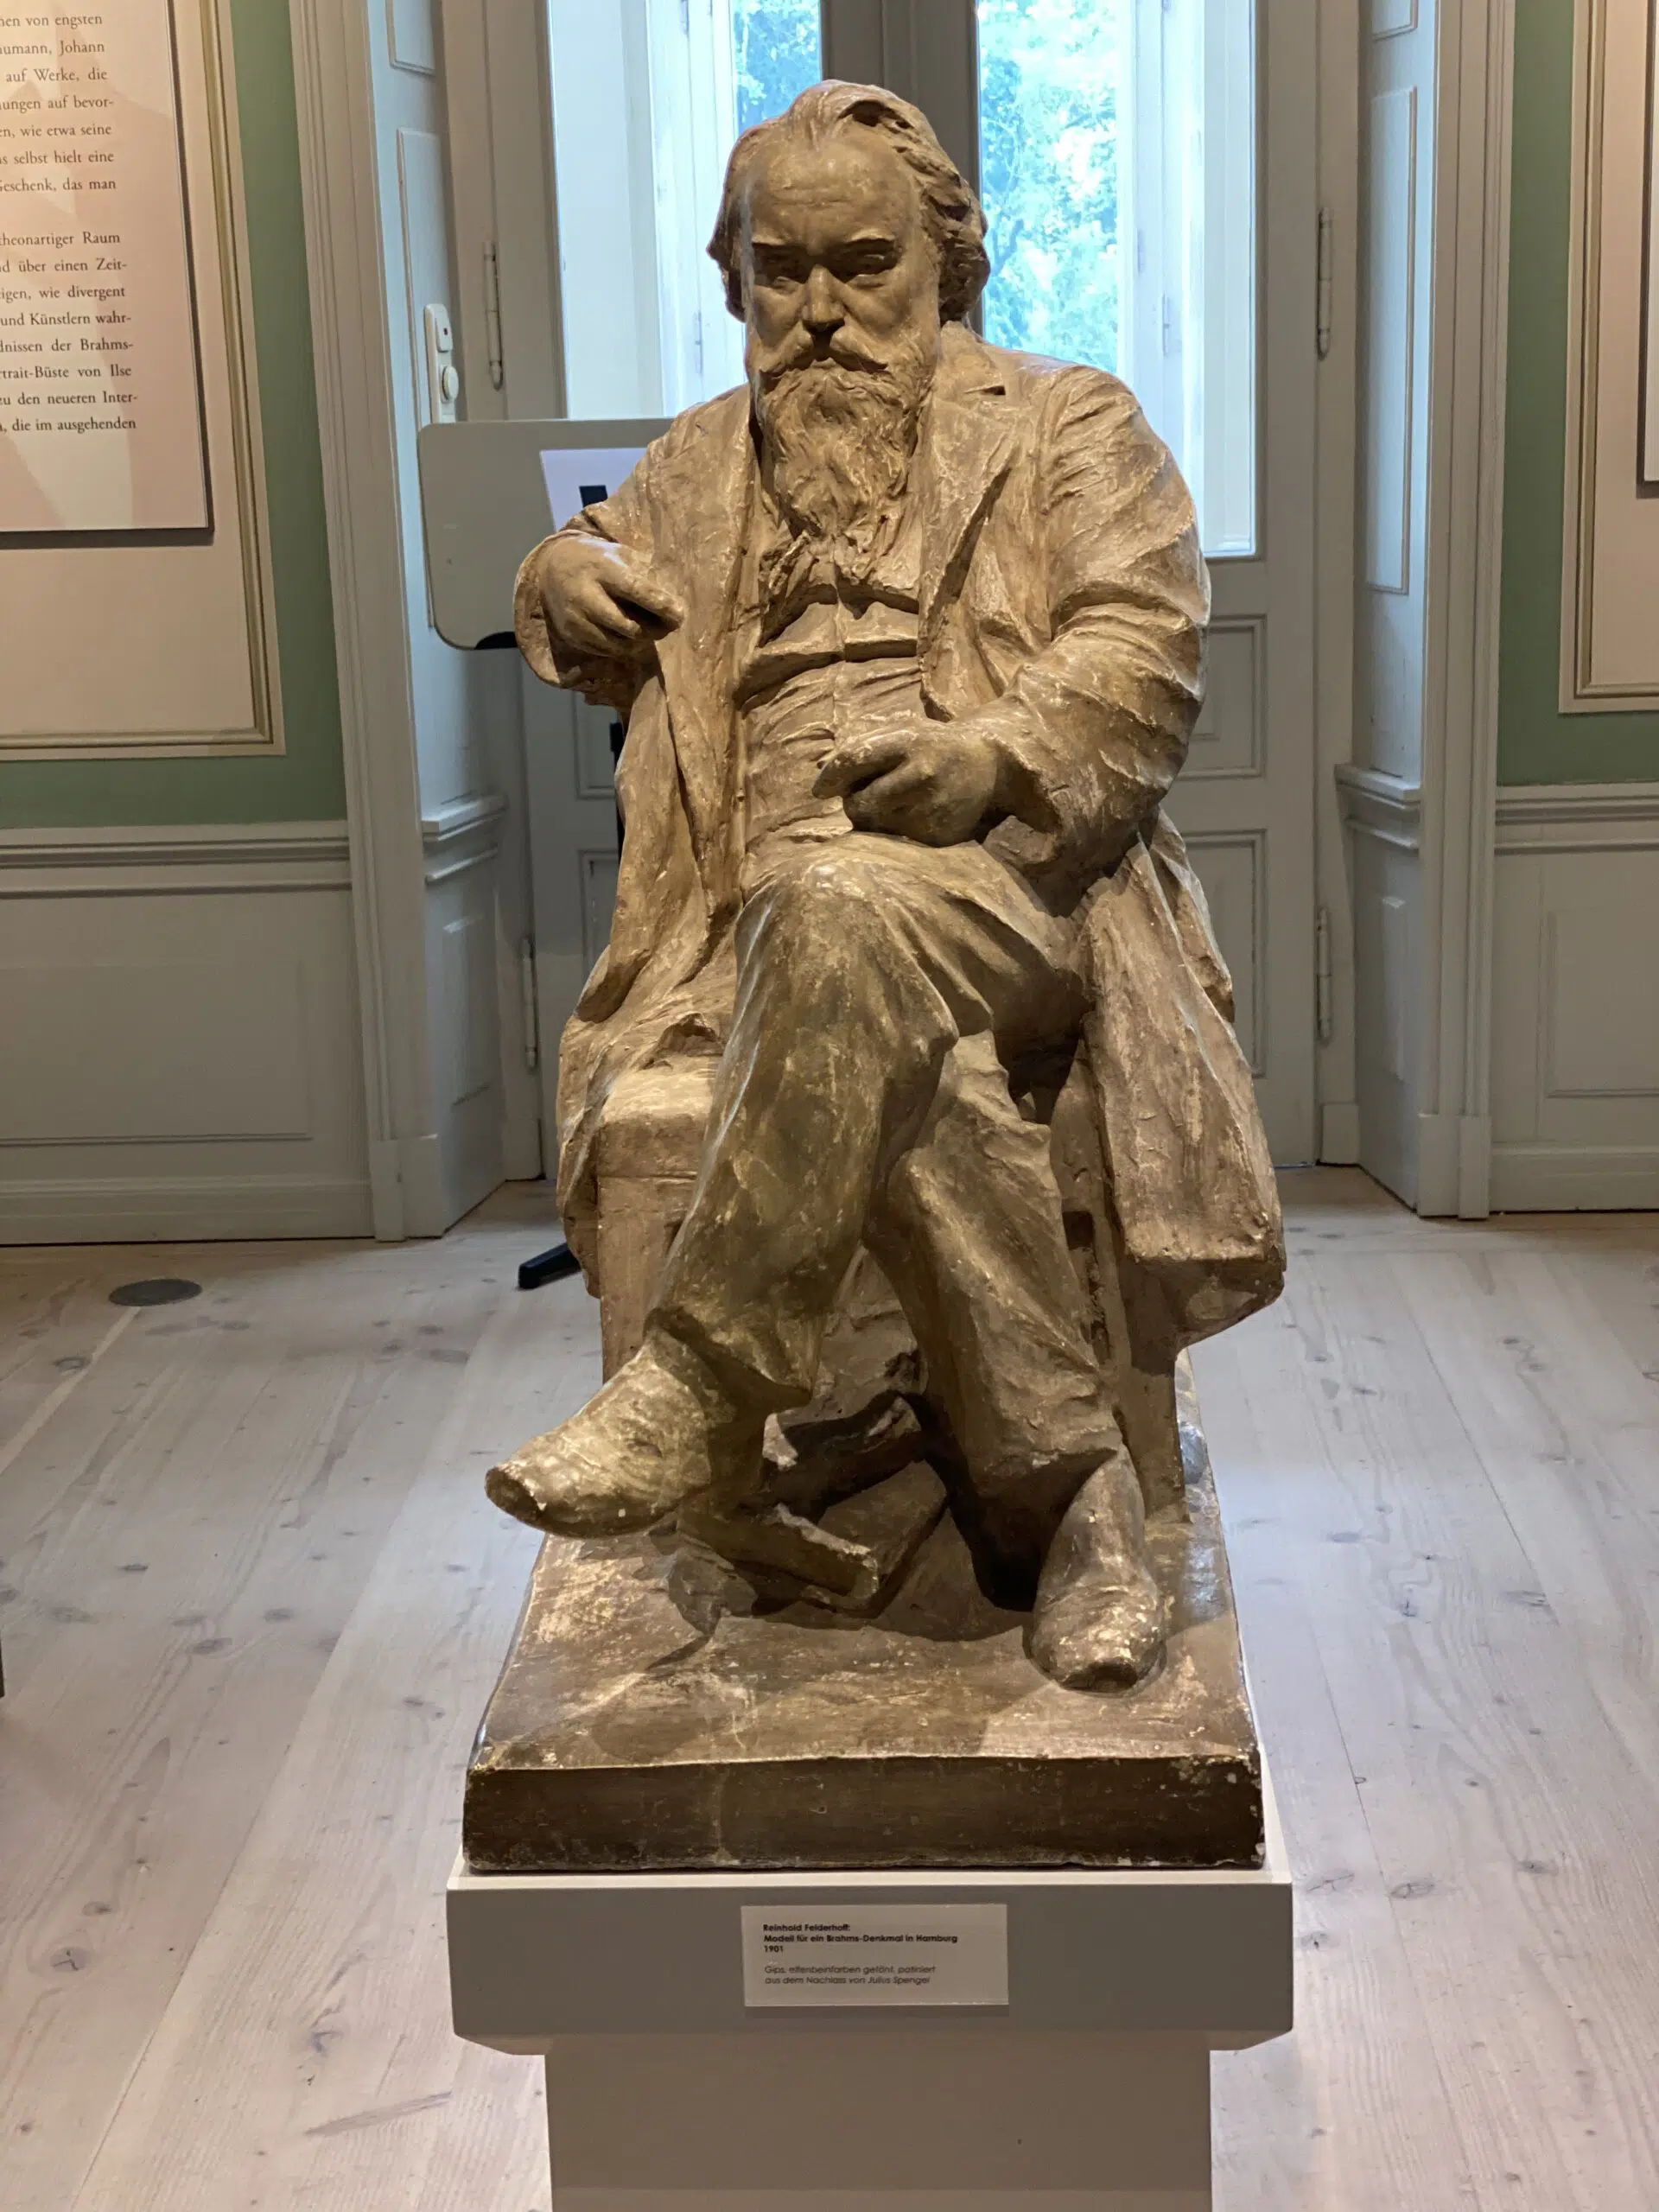 Brahms Skulptur scaled